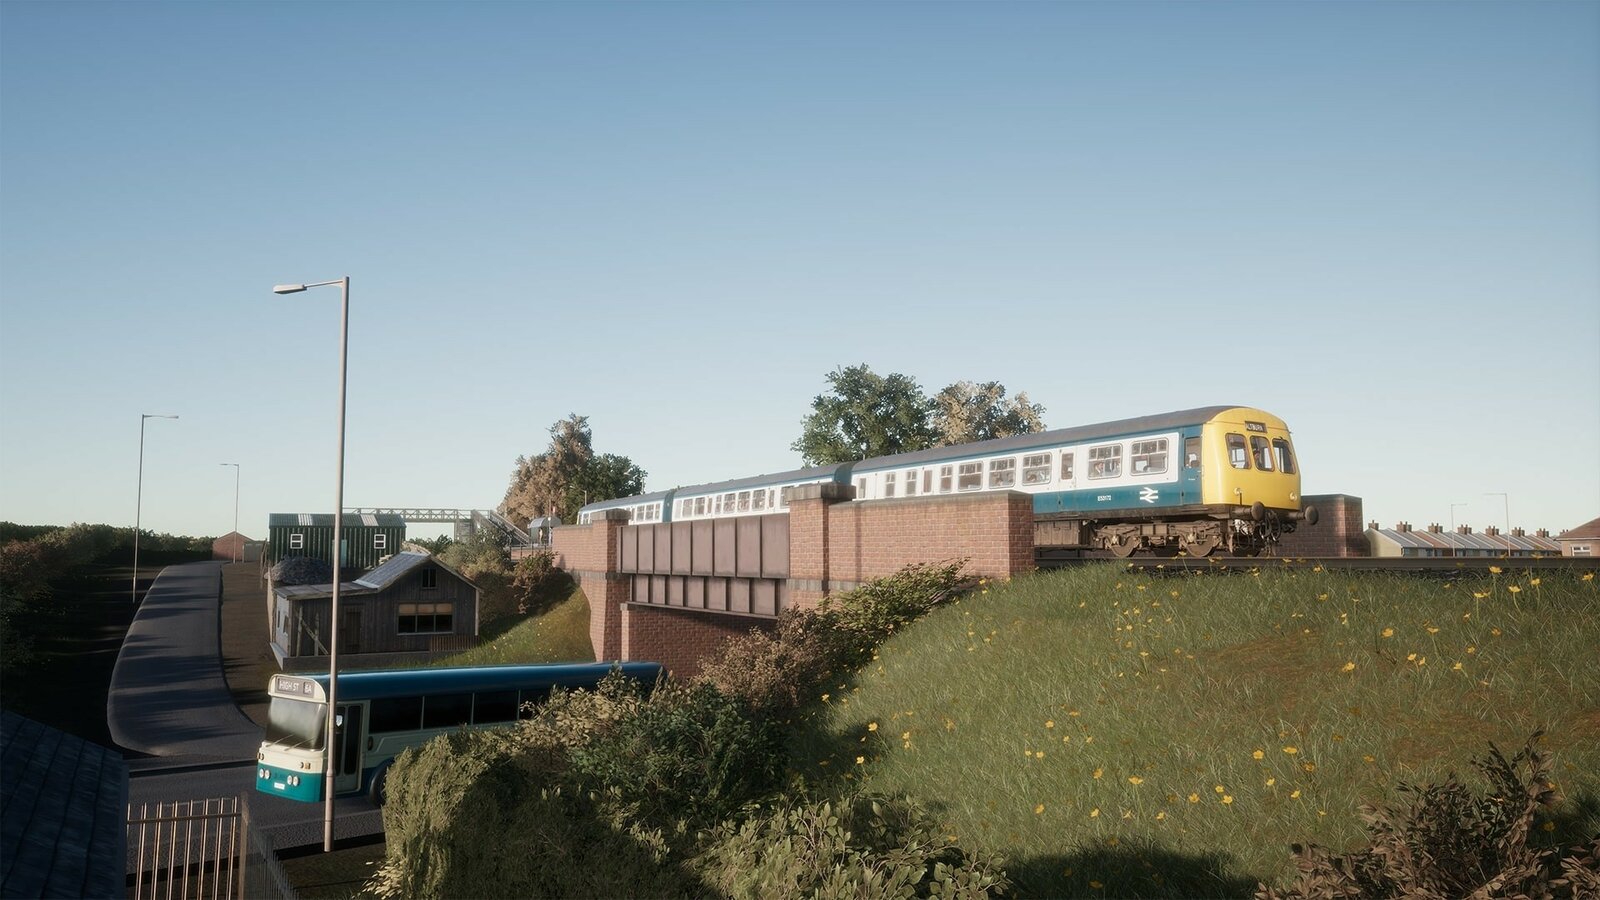 Train Sim World 2 - Tees Valley Line: Darlington – Saltburn-by-the-Sea Route